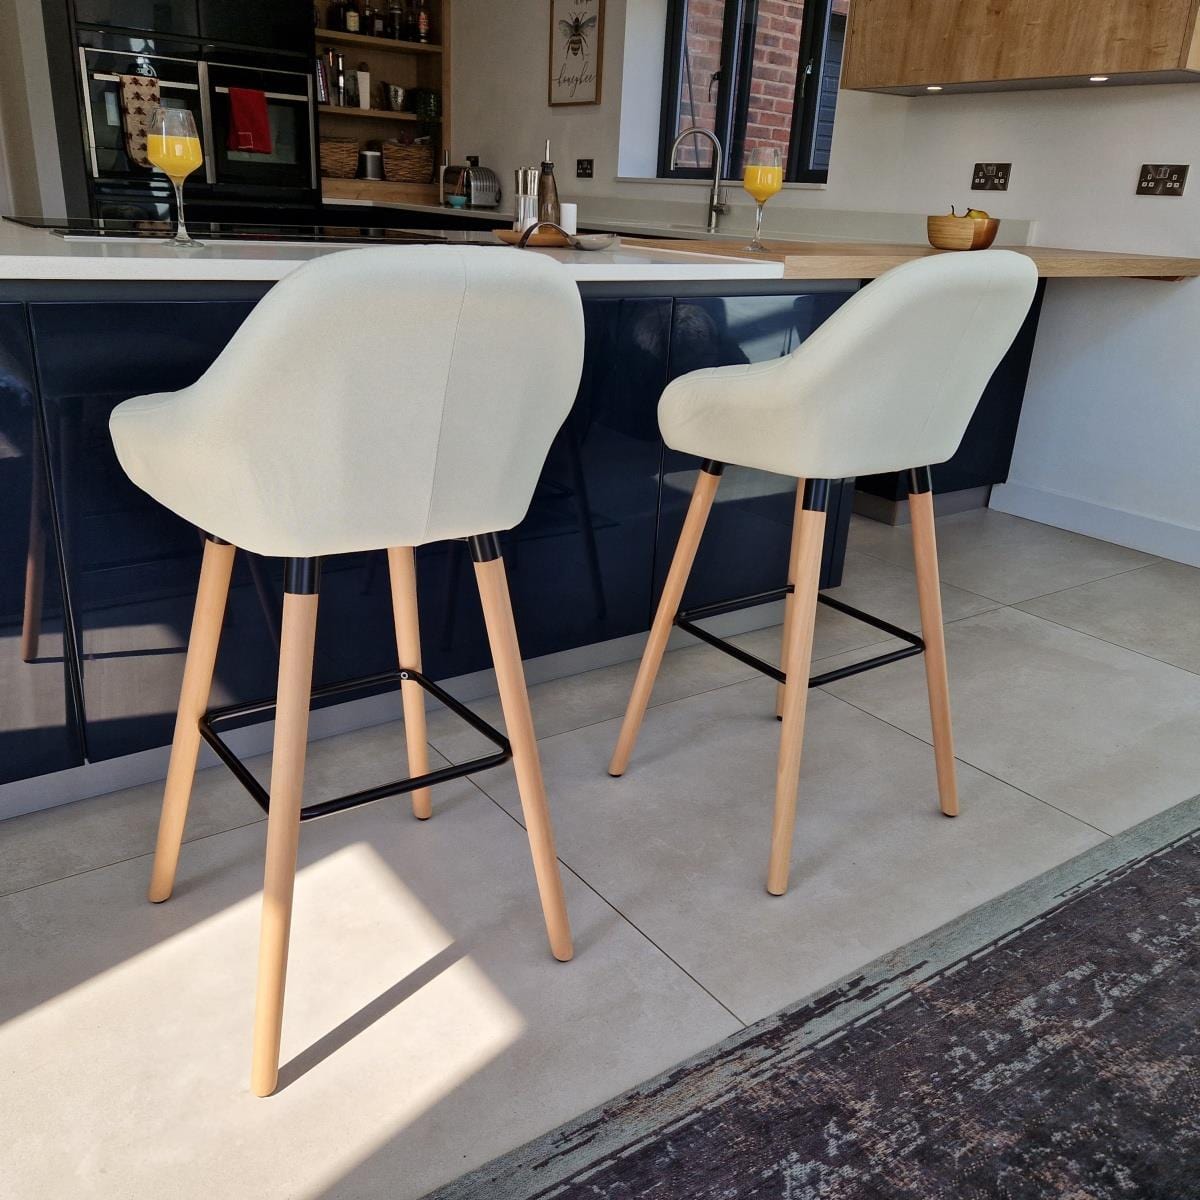 Quatropi Set of 4 Fabric Bar Stools With Wooden Legs - Exclusive Cream Kitchen Bar Stool